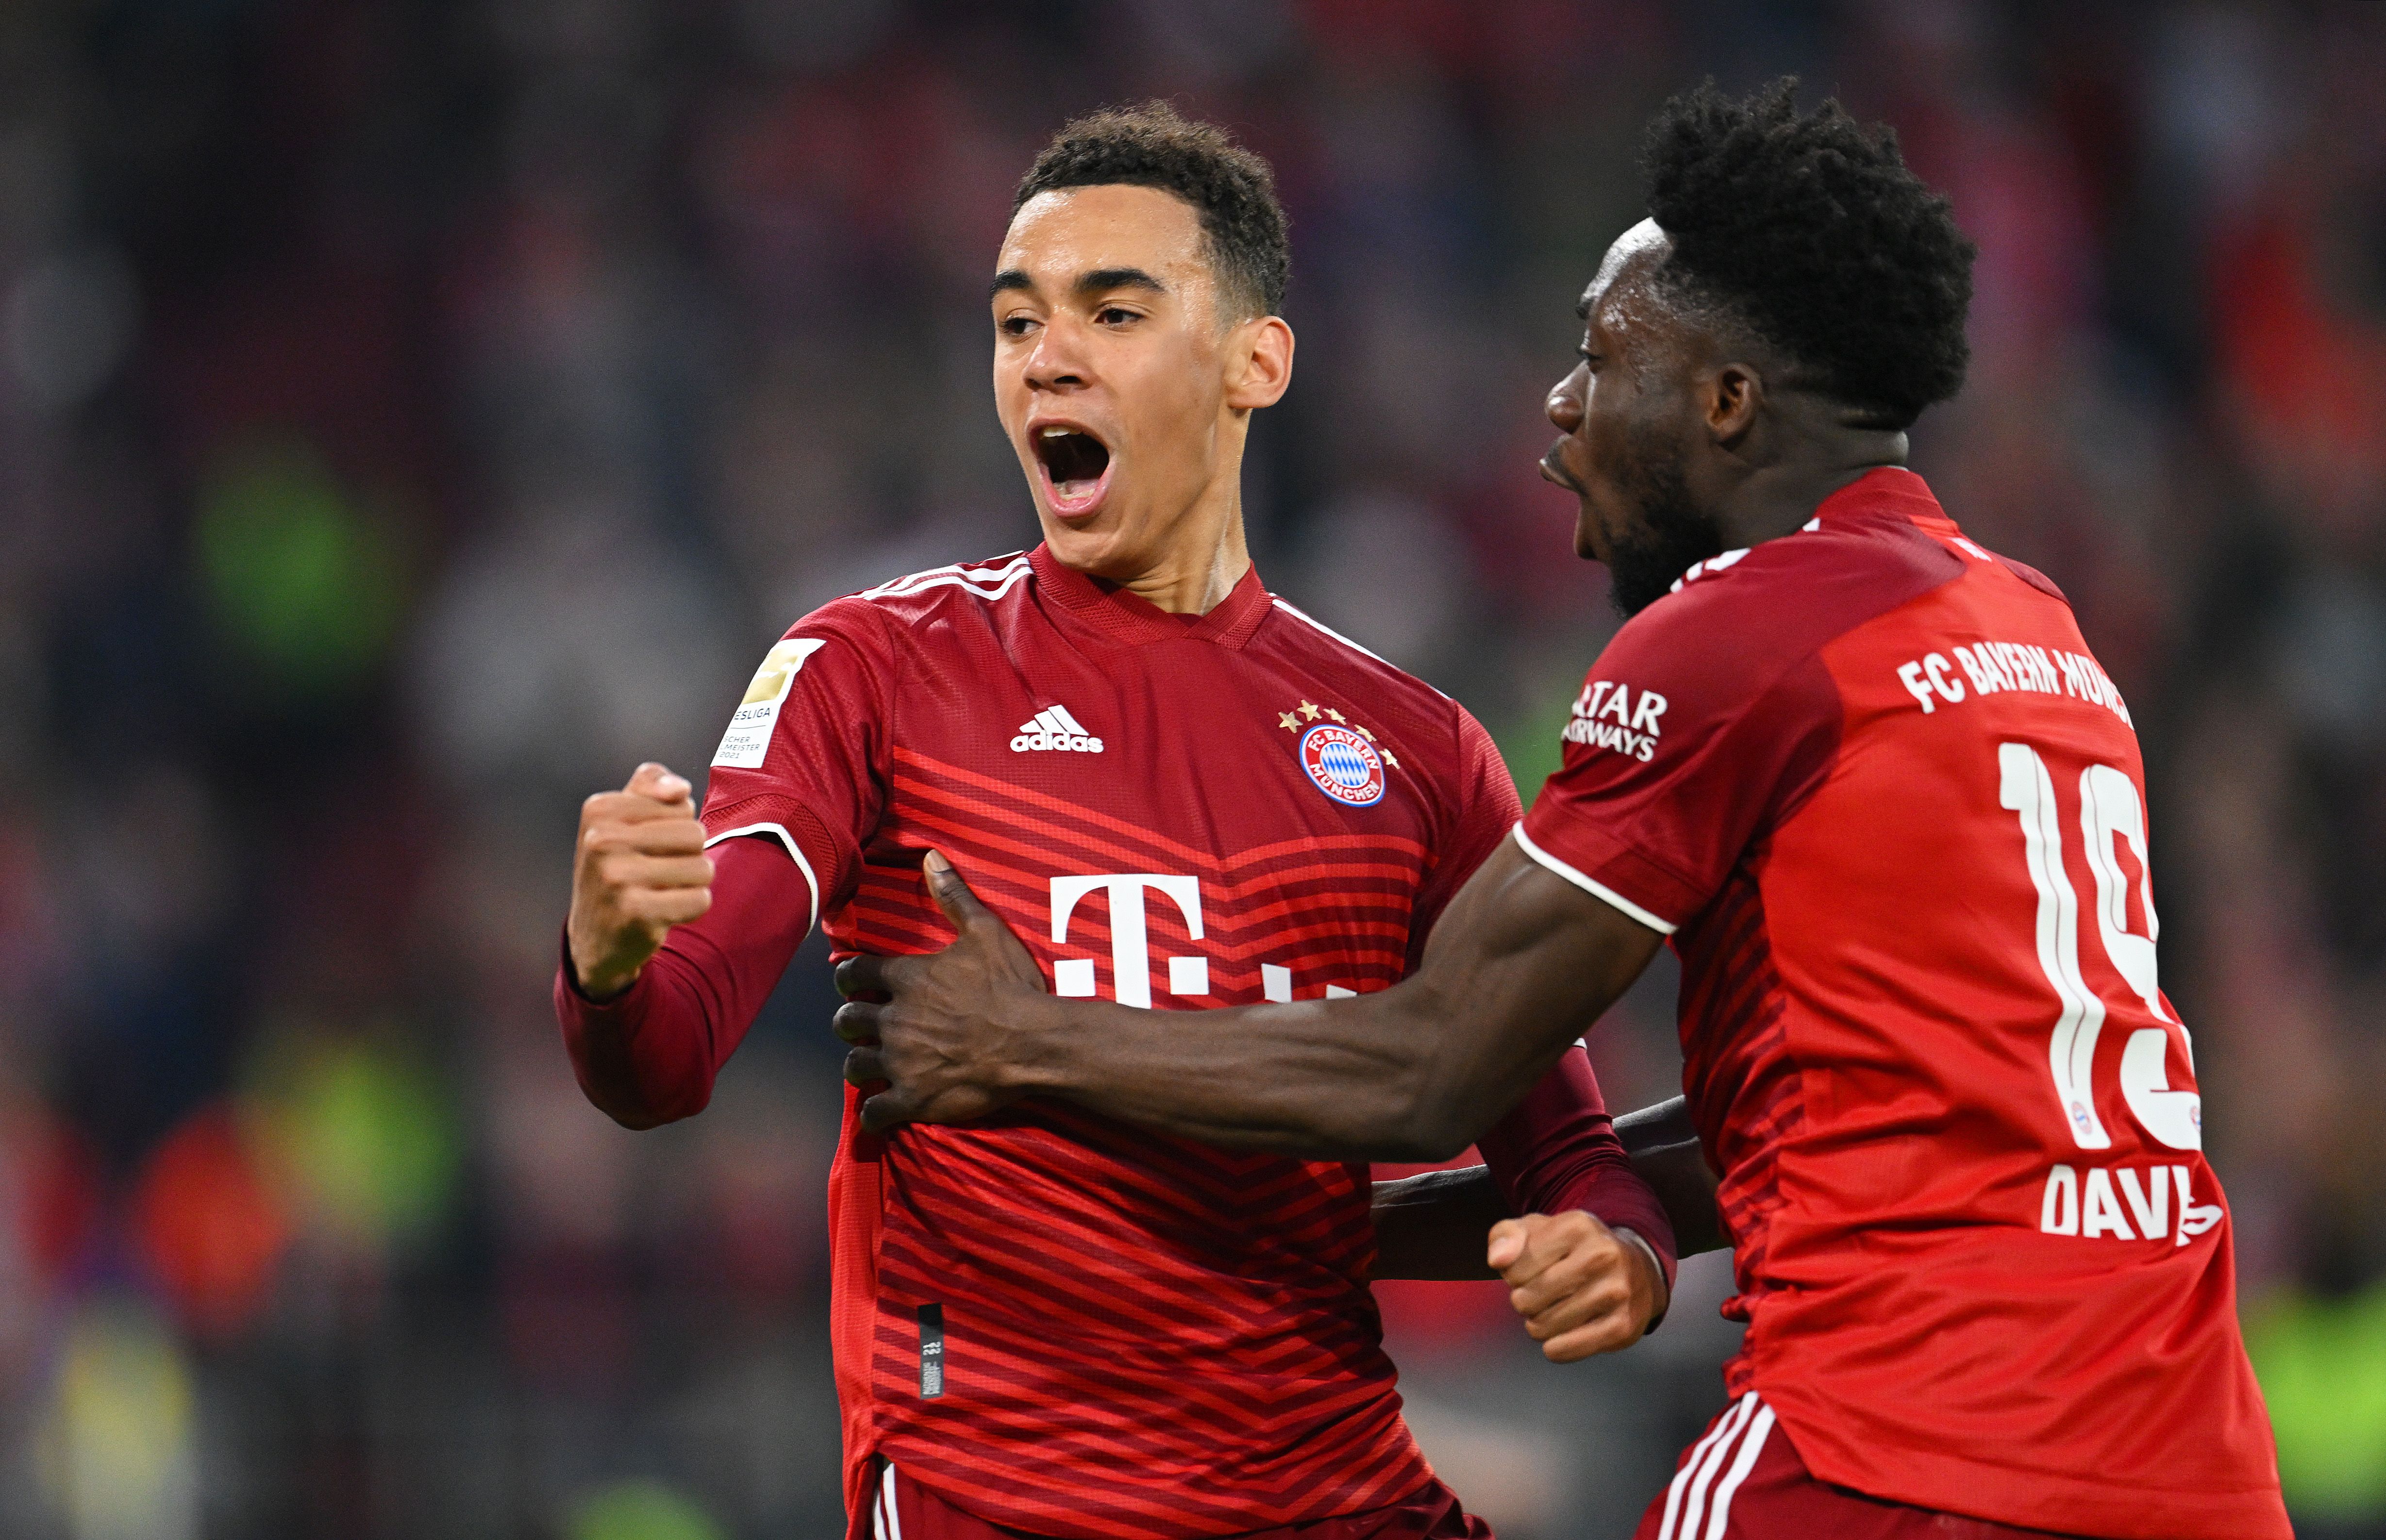 Bayern Munich wins consecutive Bundesliga title after beating Borussia Dortmund | CNN